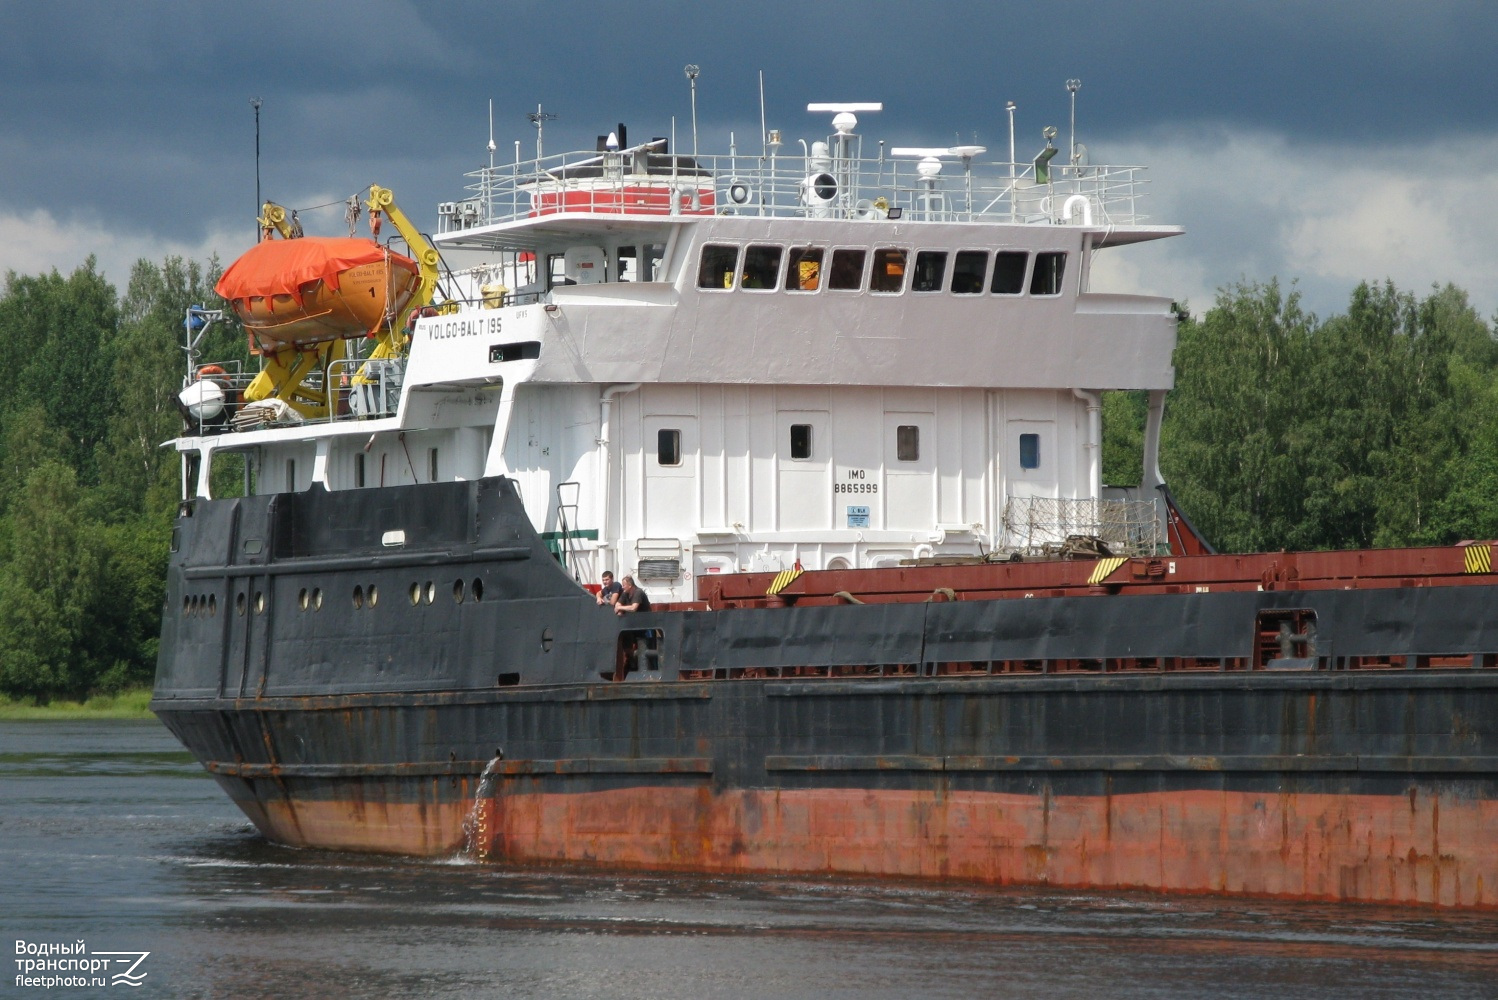 Волго-Балт 195. Vessel superstructures